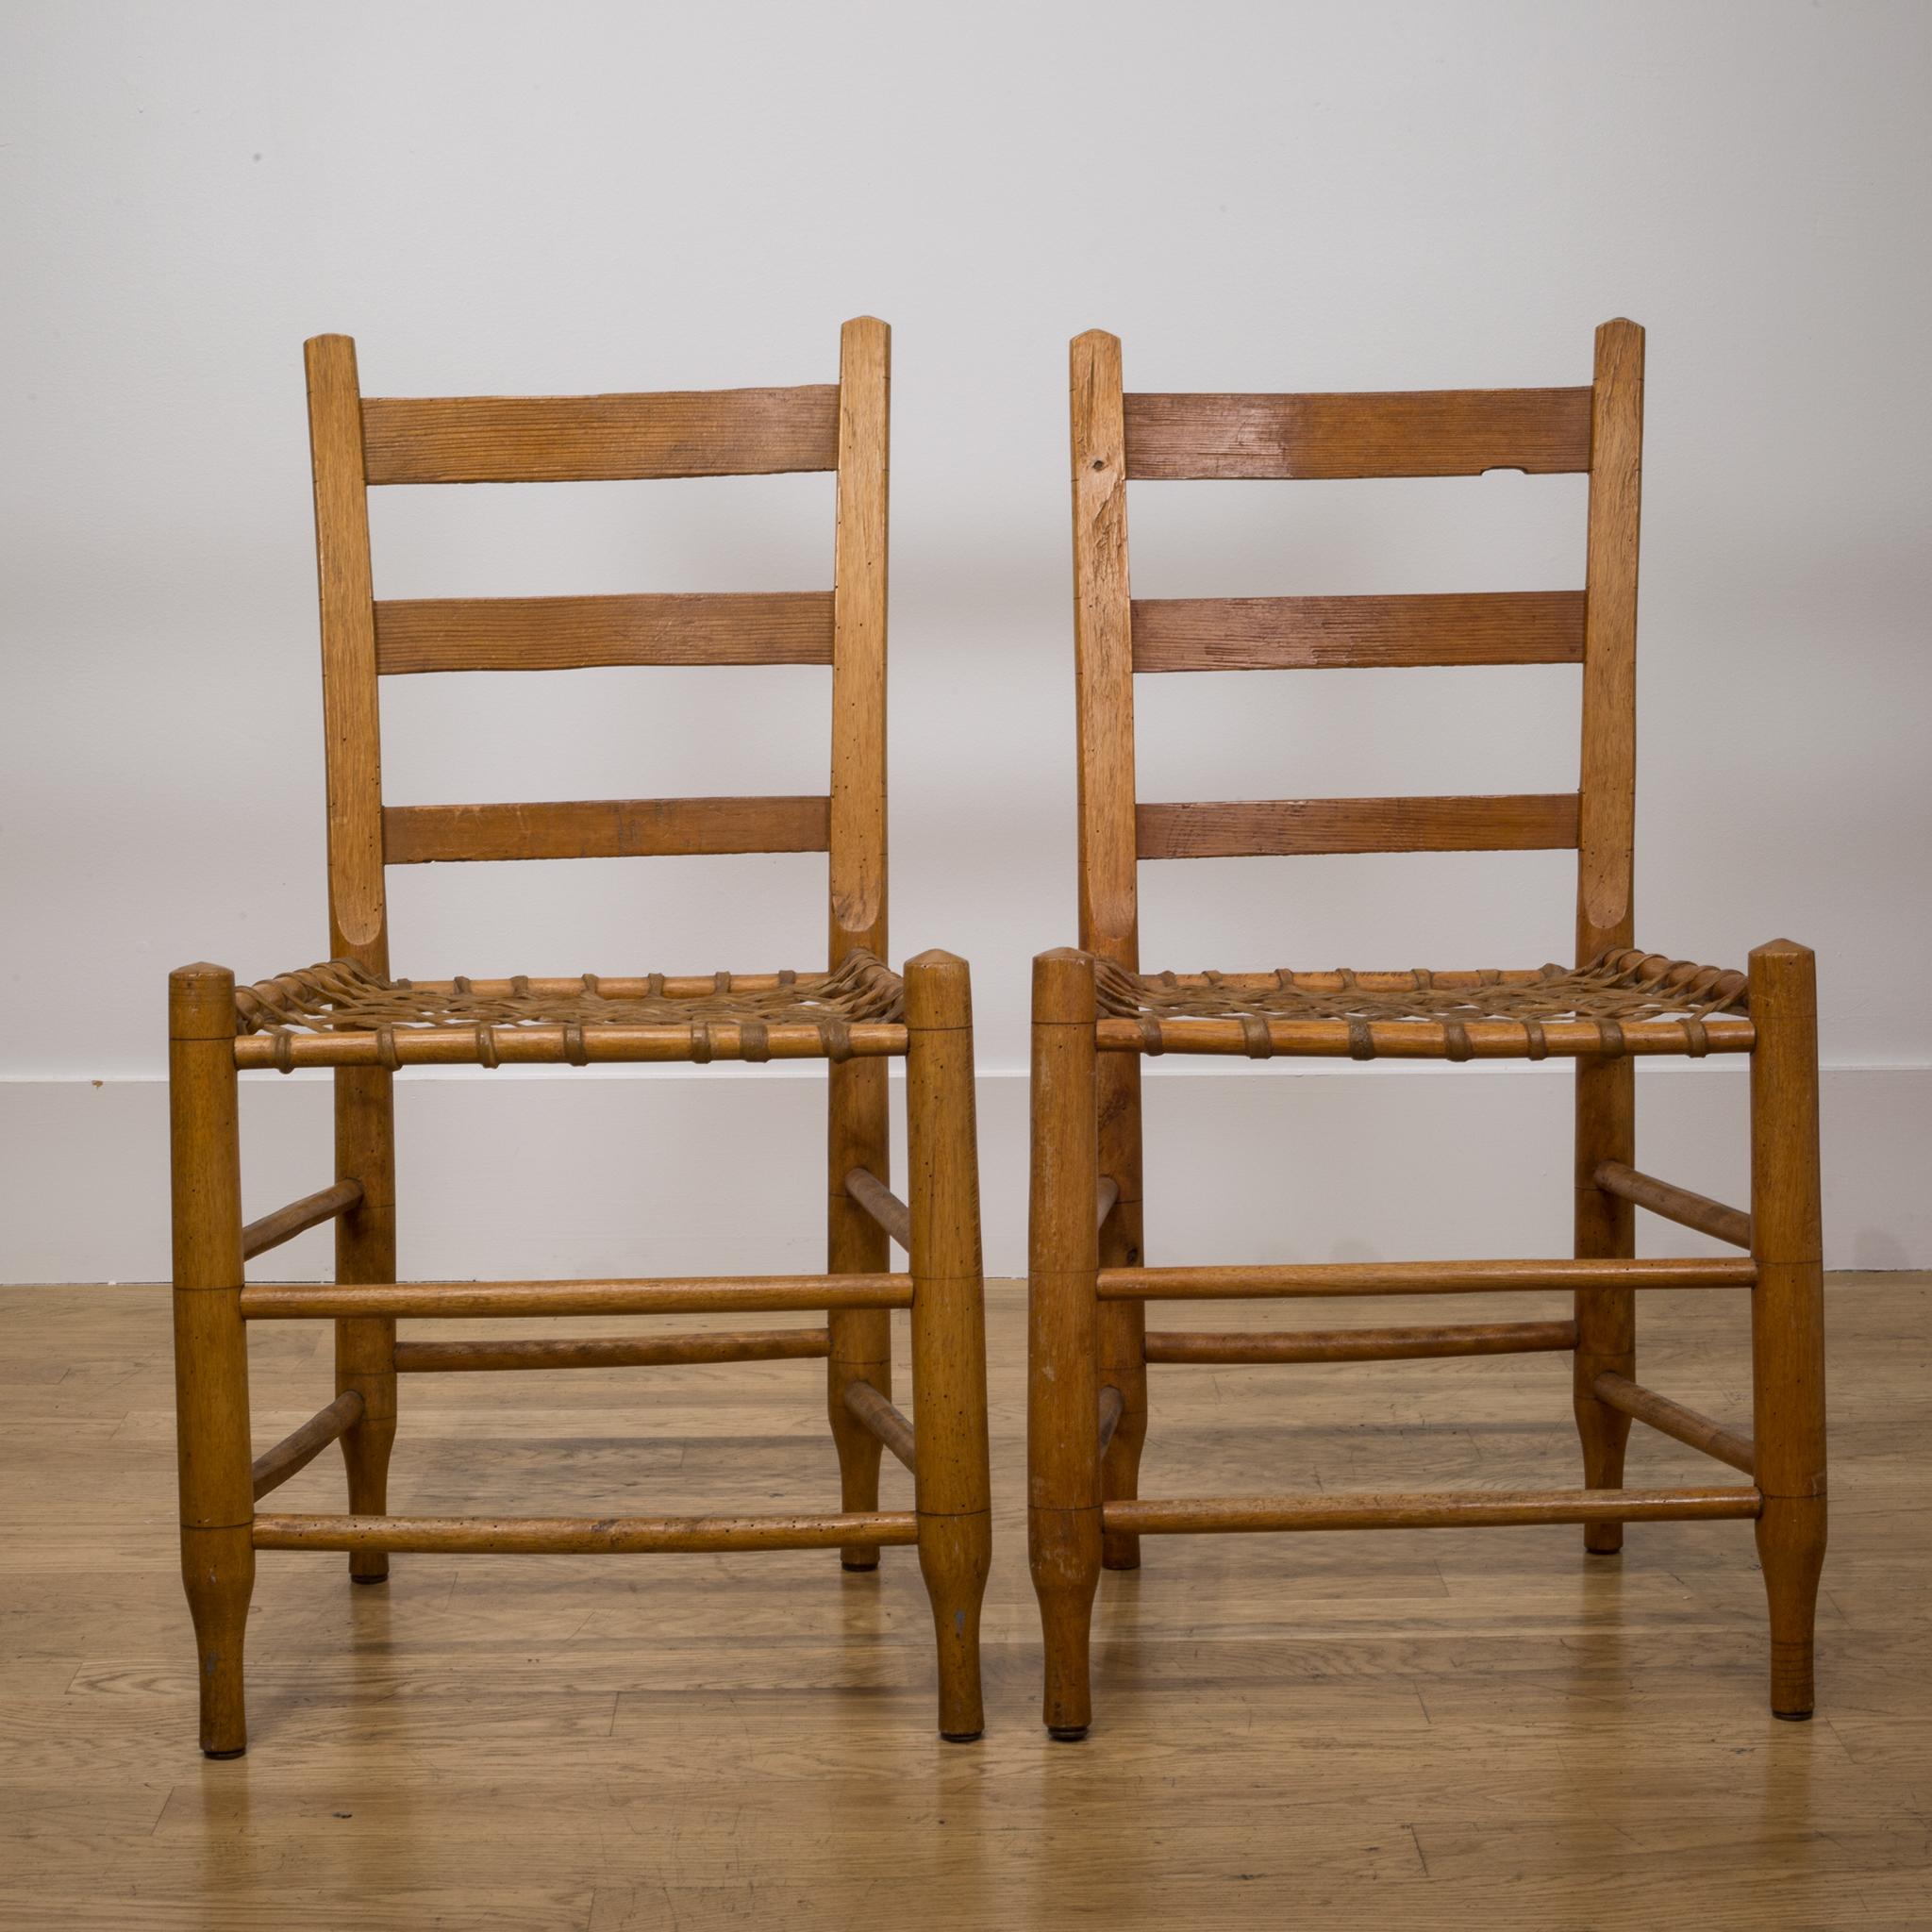 Animal Skin 19th c. Handmade Wood/Rawhide Chairs from Historic  Oregon Commune c. 1856-1866